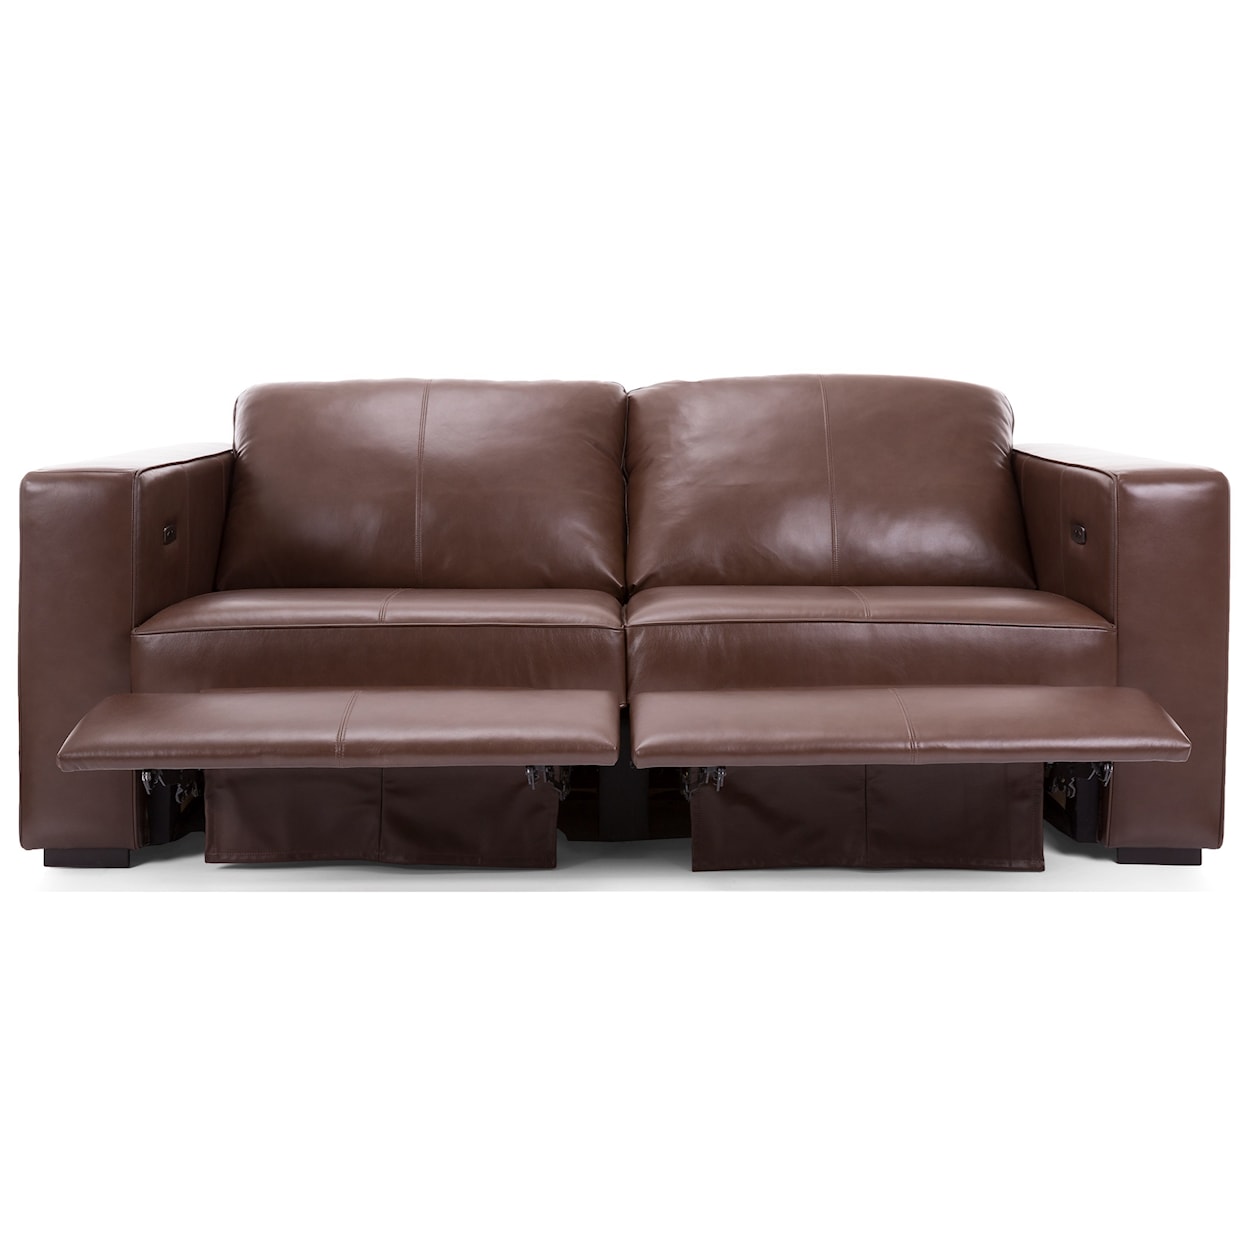 Taelor Designs Braden Power Sofa